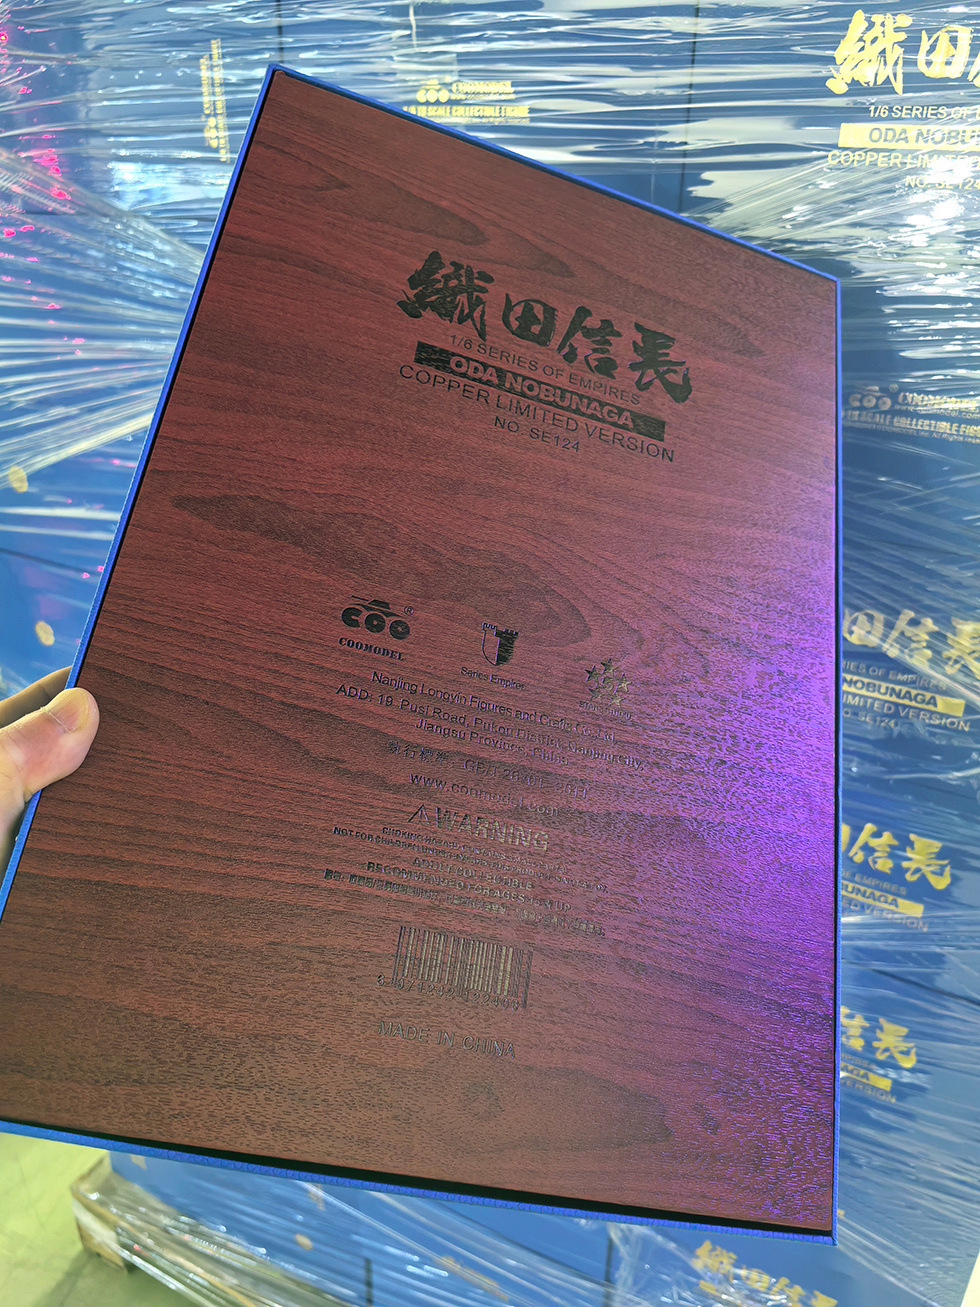 NEW PRODUCT: COOMODEL: 1/6 Empire Series - Oda Nobunaga Samurai Edition/Hunting Edition/Pure Copper Standard Edition/Pure Copper Limited Collection Edition #SE124 B6b66012